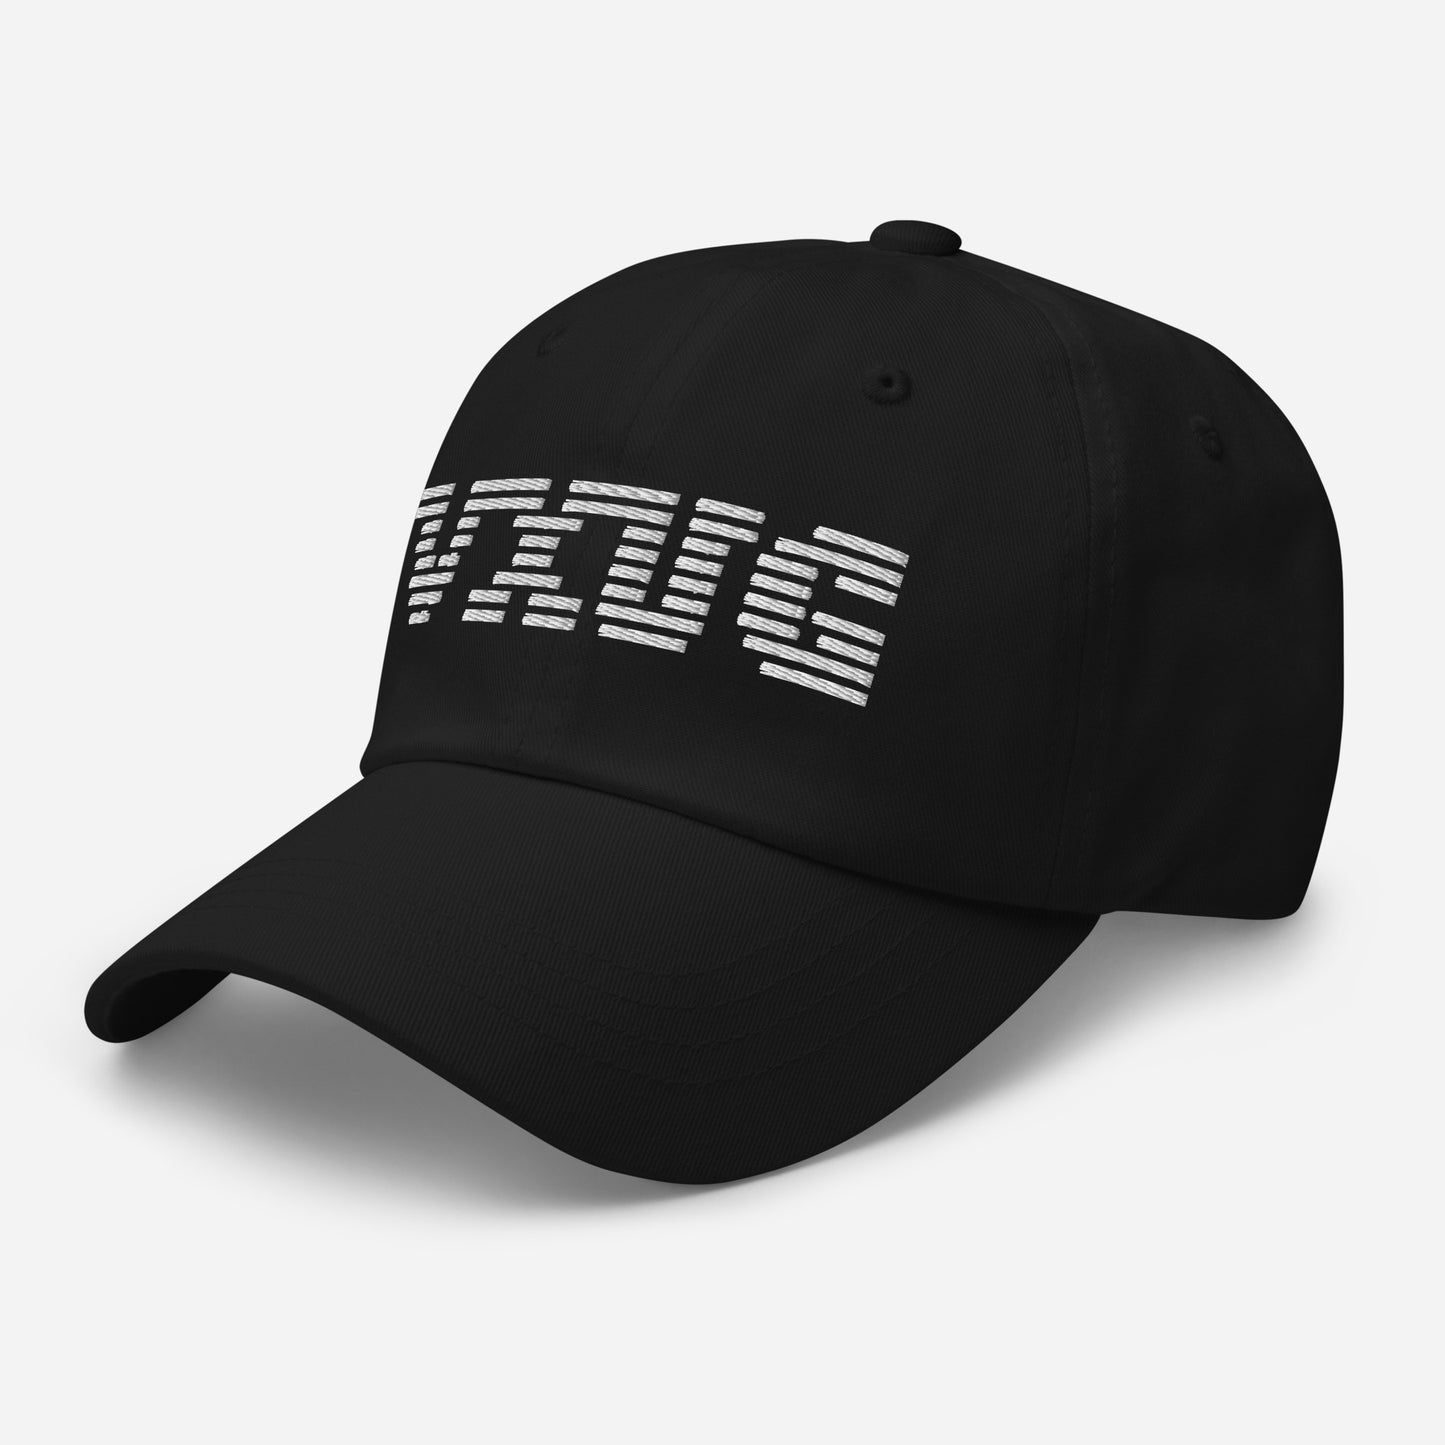 VXUG Corporate Hat